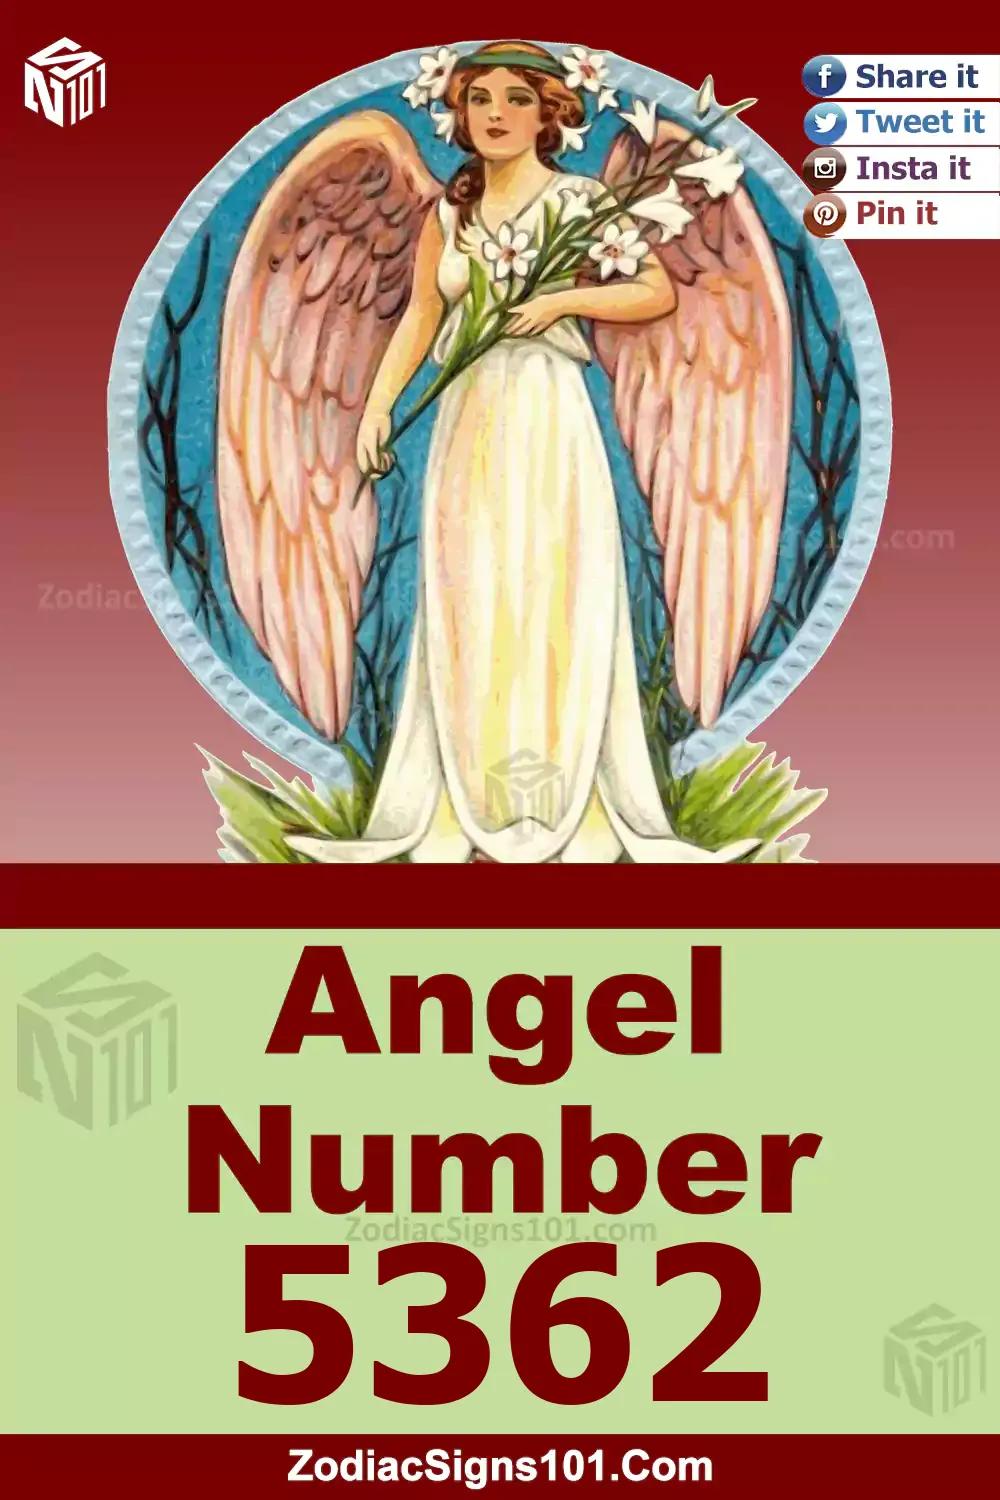 5362-Angel-Number-Meaning.jpg